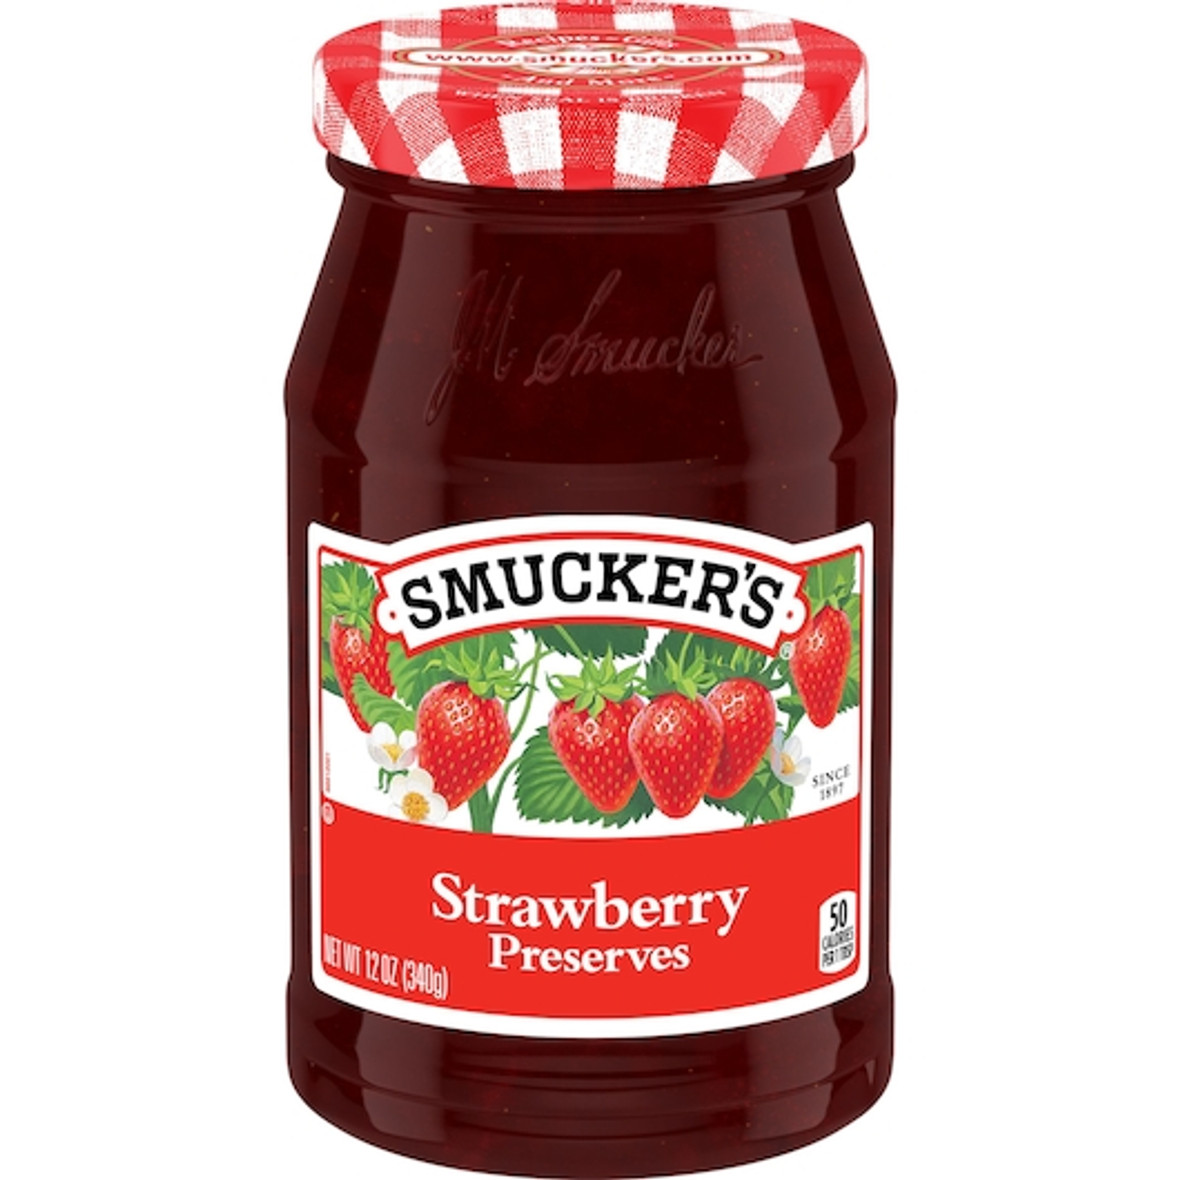 Smucker s Strawberry Preserves, 12 Ounces, 12 Per Case